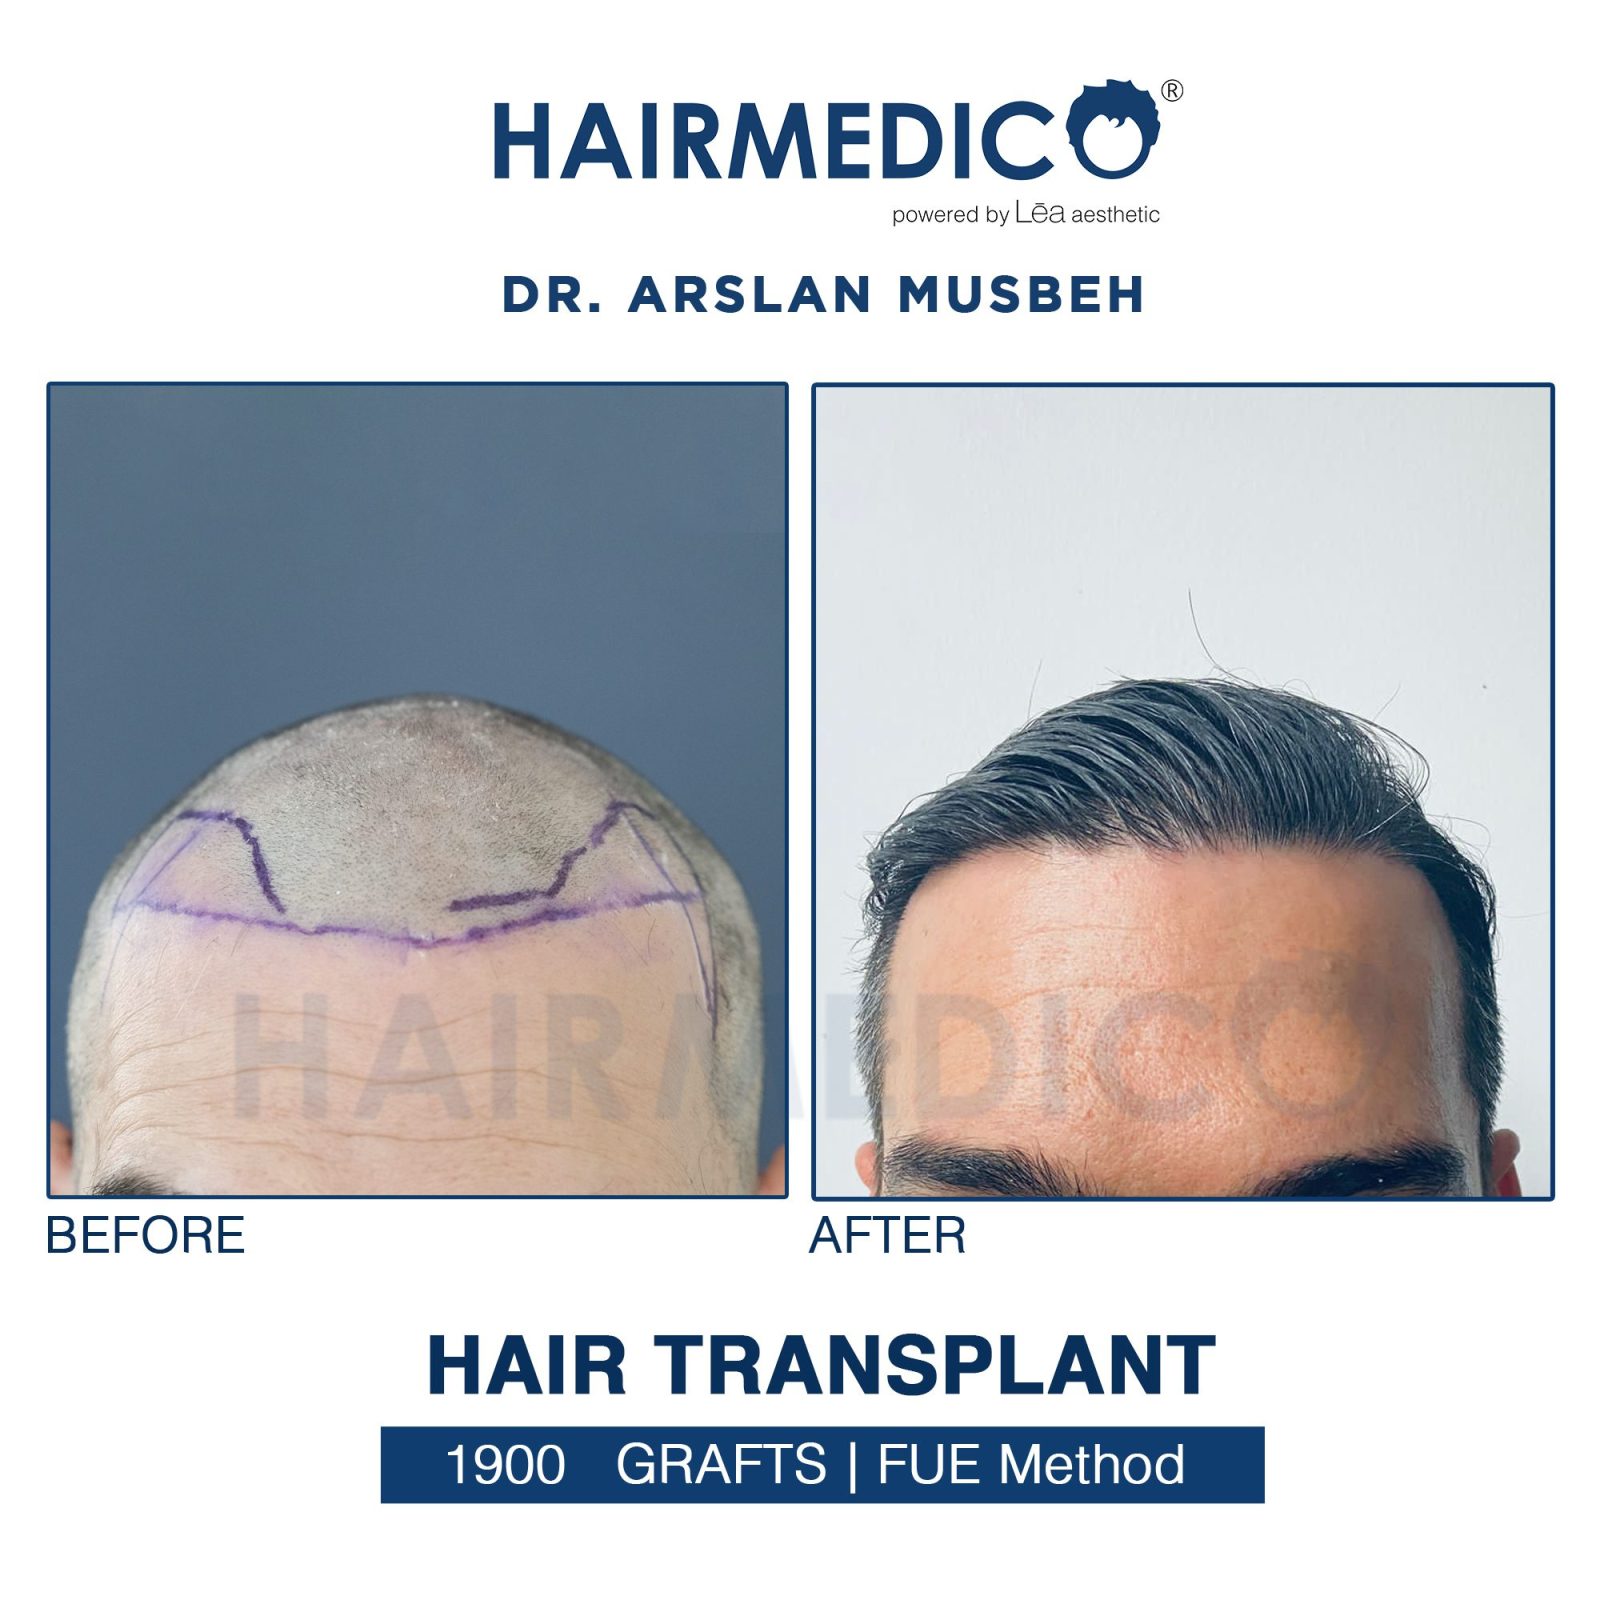 Hair Transplant in Turkey